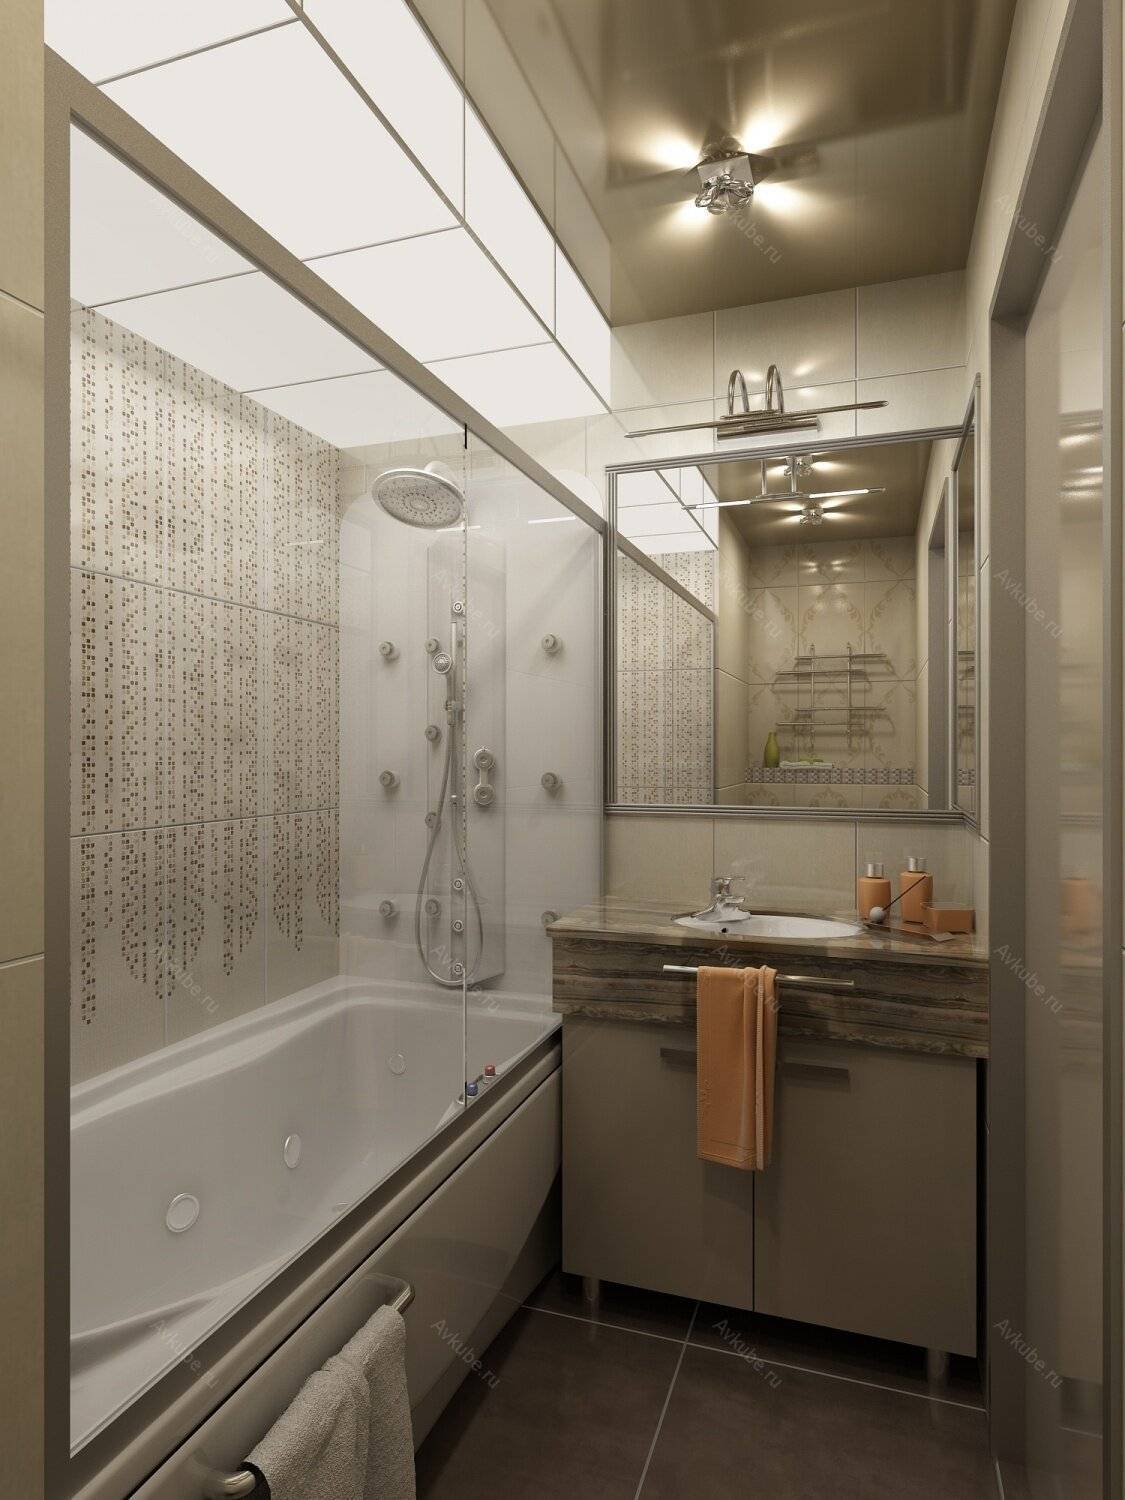 Ванная комната дизайн мал размер. Дизайн ванной комнаты. Интерьер небольшой ванной. Дизайнерская ванная комната. Дизайн маленькой ванной комнаты.